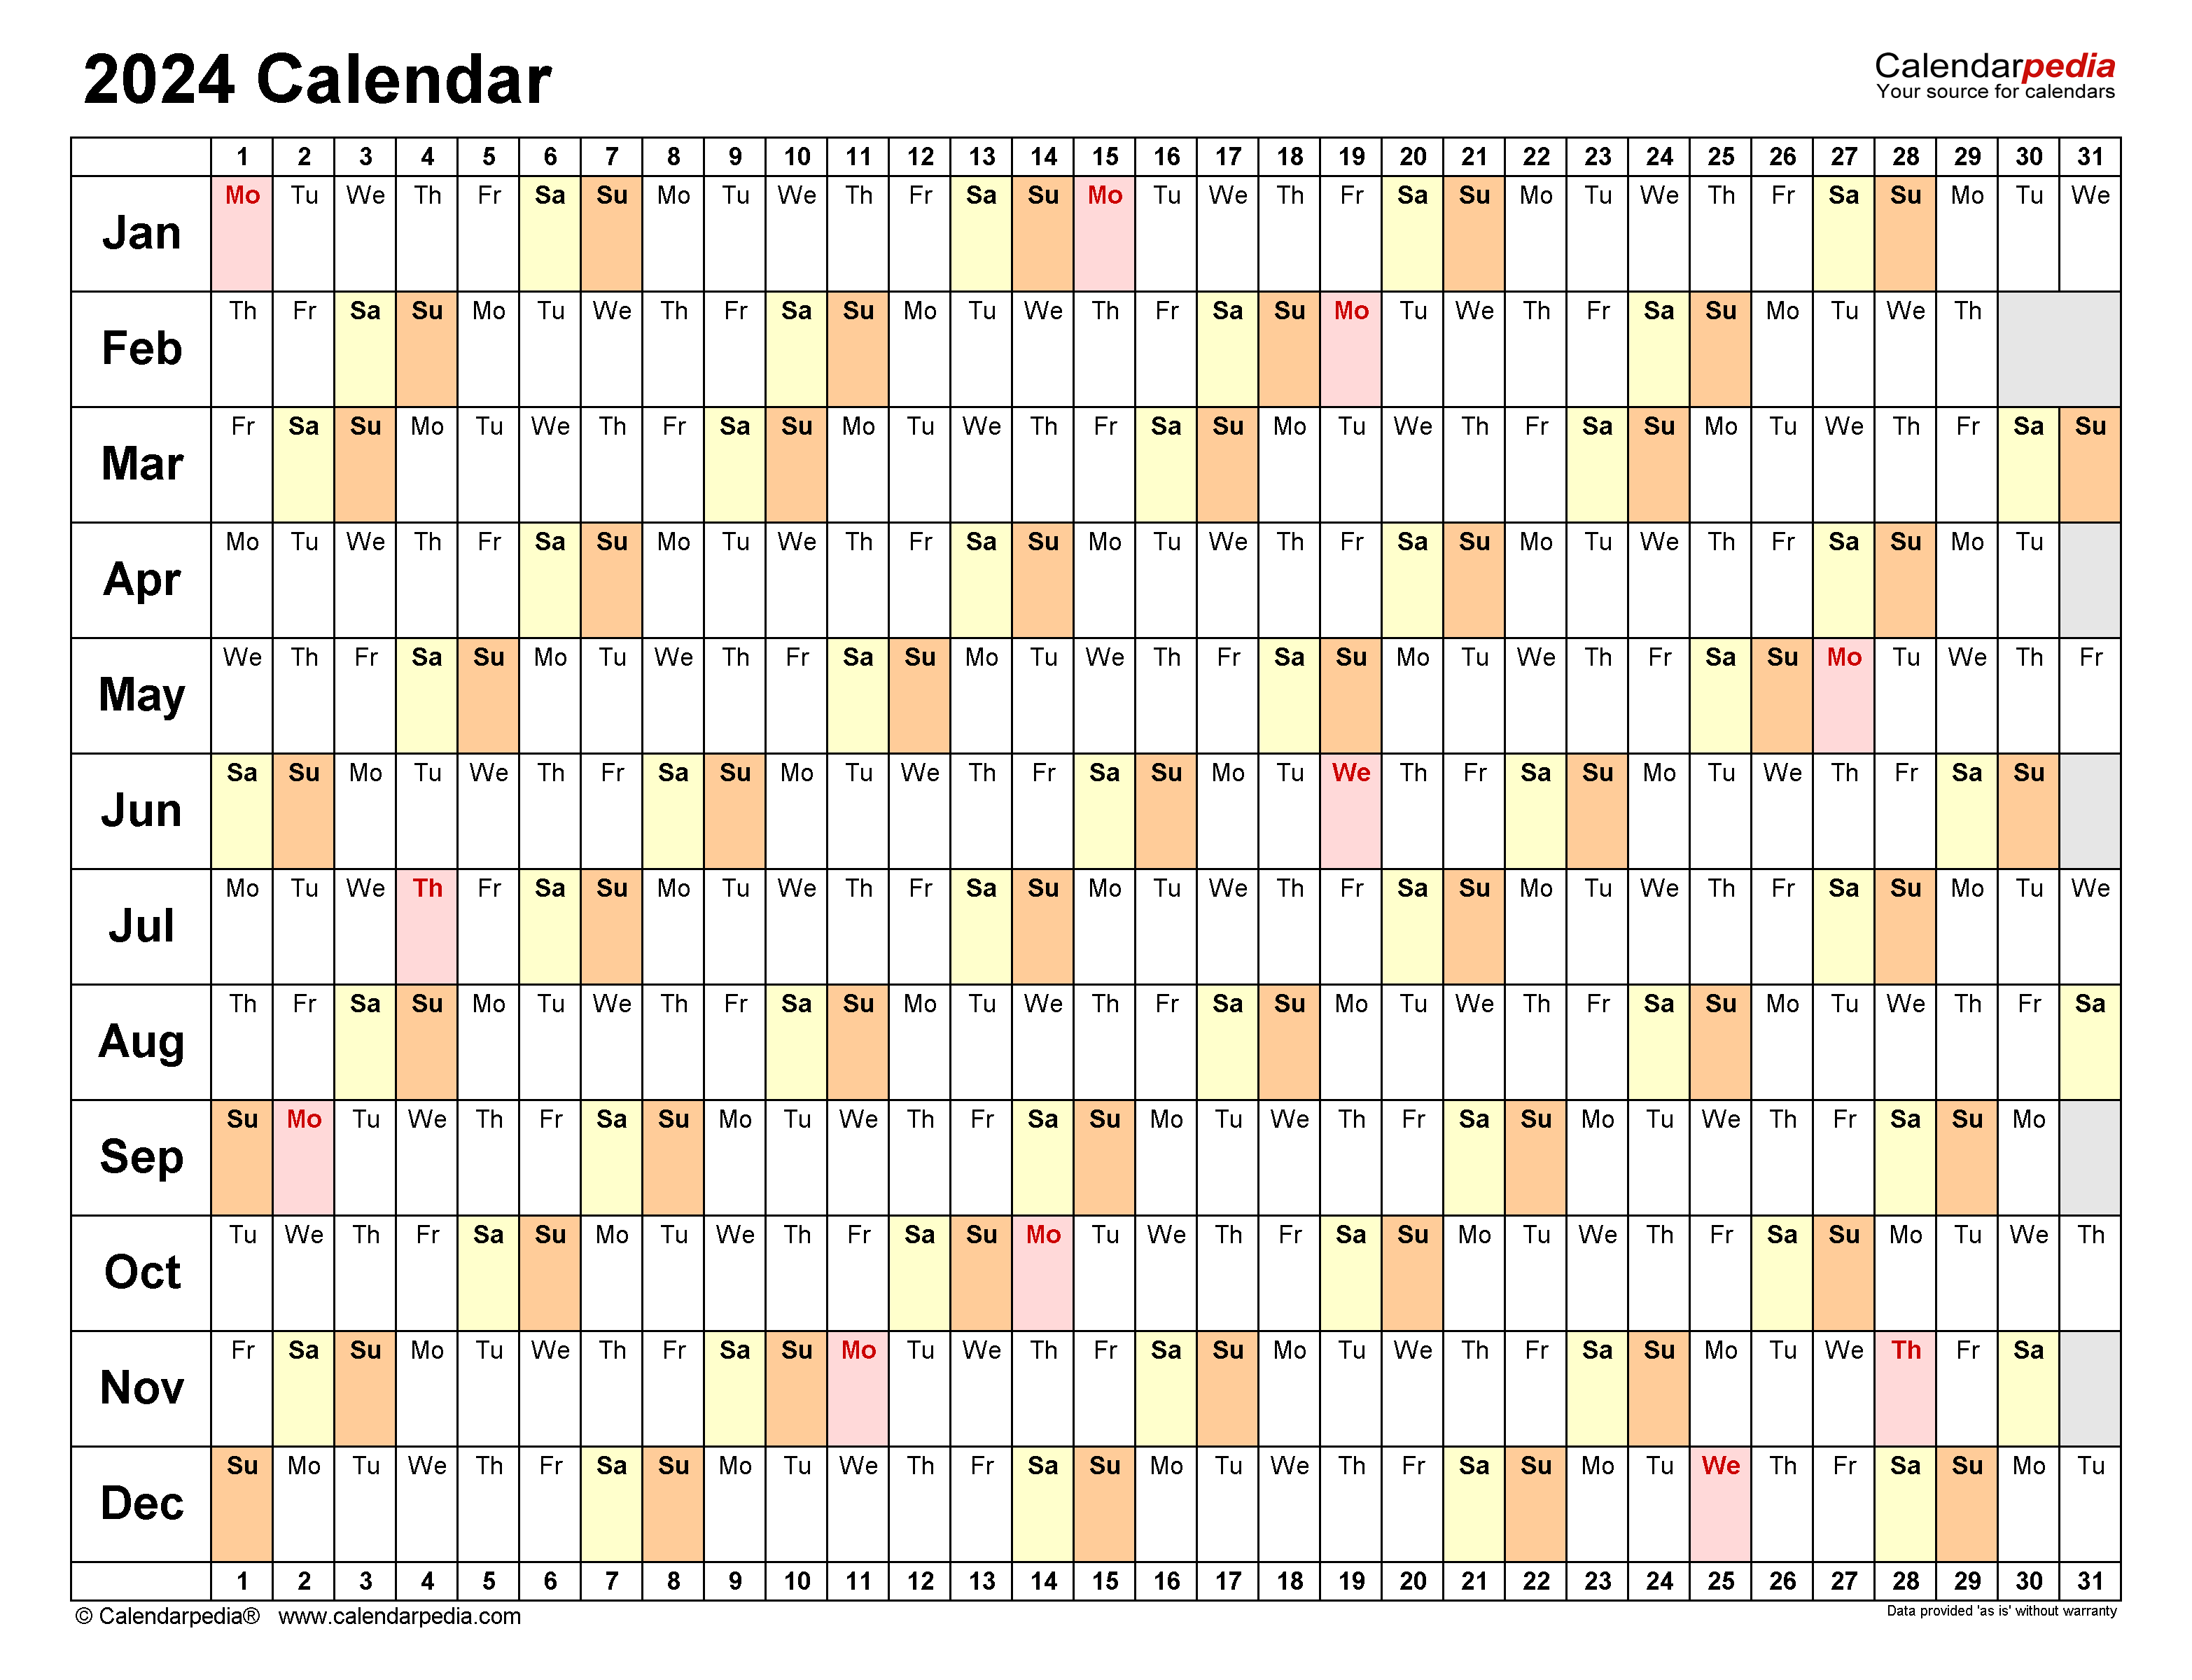 2024 Calendar Excel Sheet Online Pdf Chery Deirdre